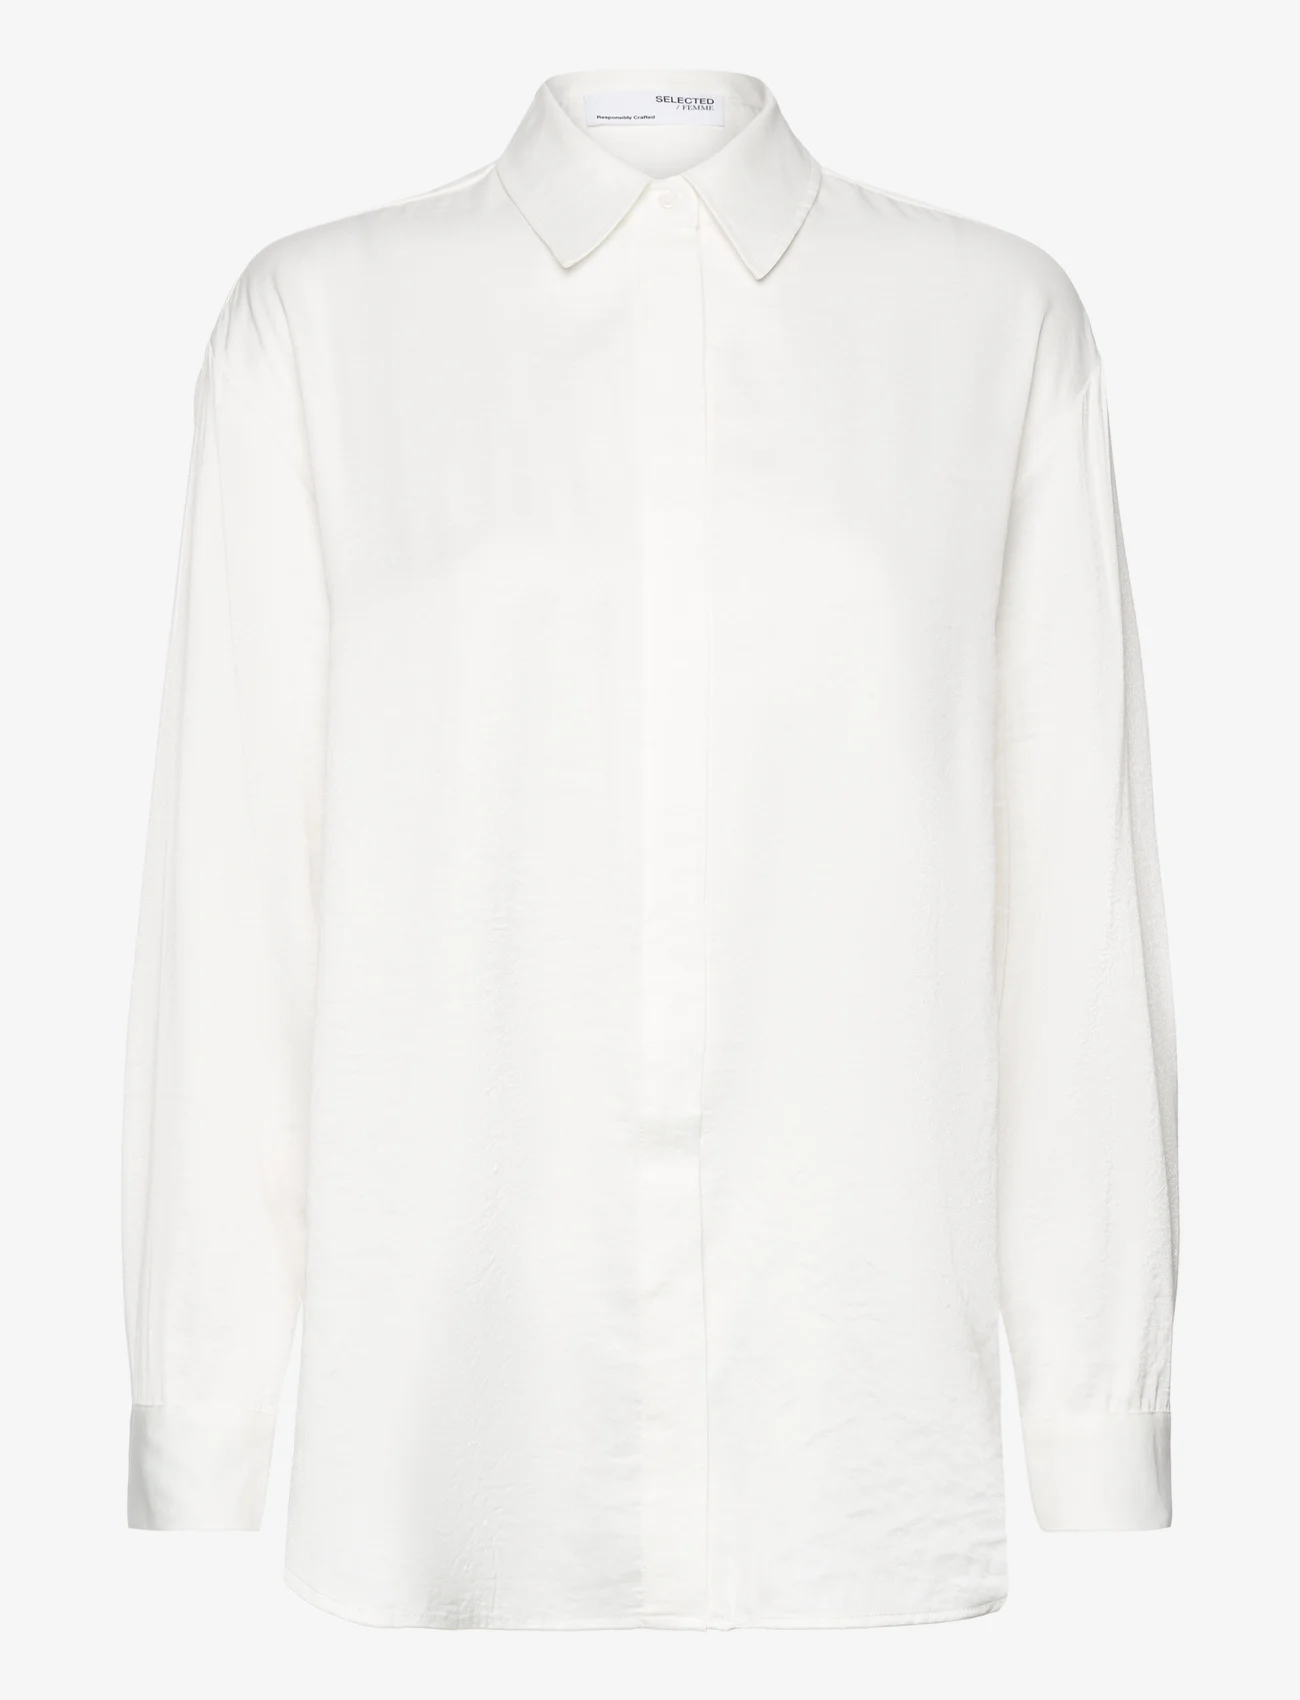 Selected Femme - SLFDESIREE LS SHIRT B - long-sleeved shirts - snow white - 0